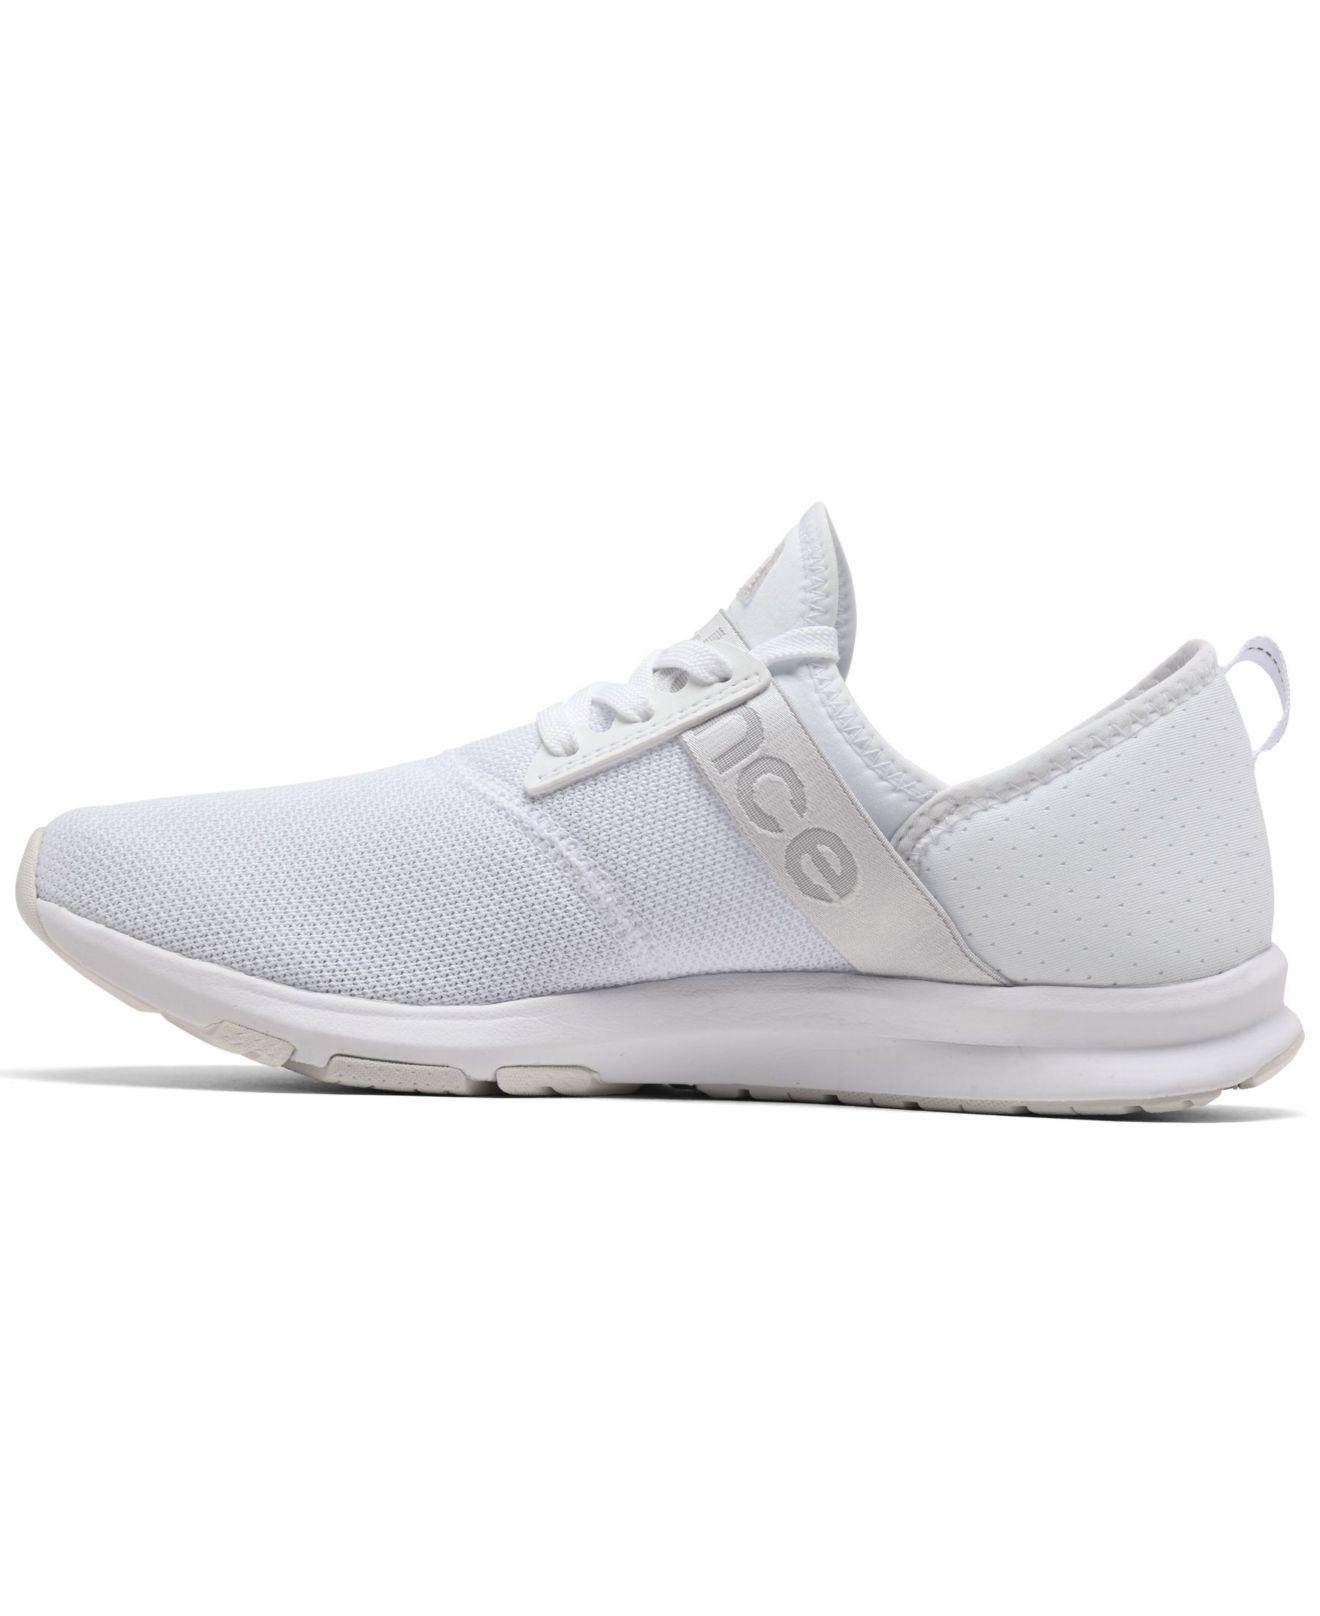 New Balance Nergize V1 Sneaker in White | Lyst